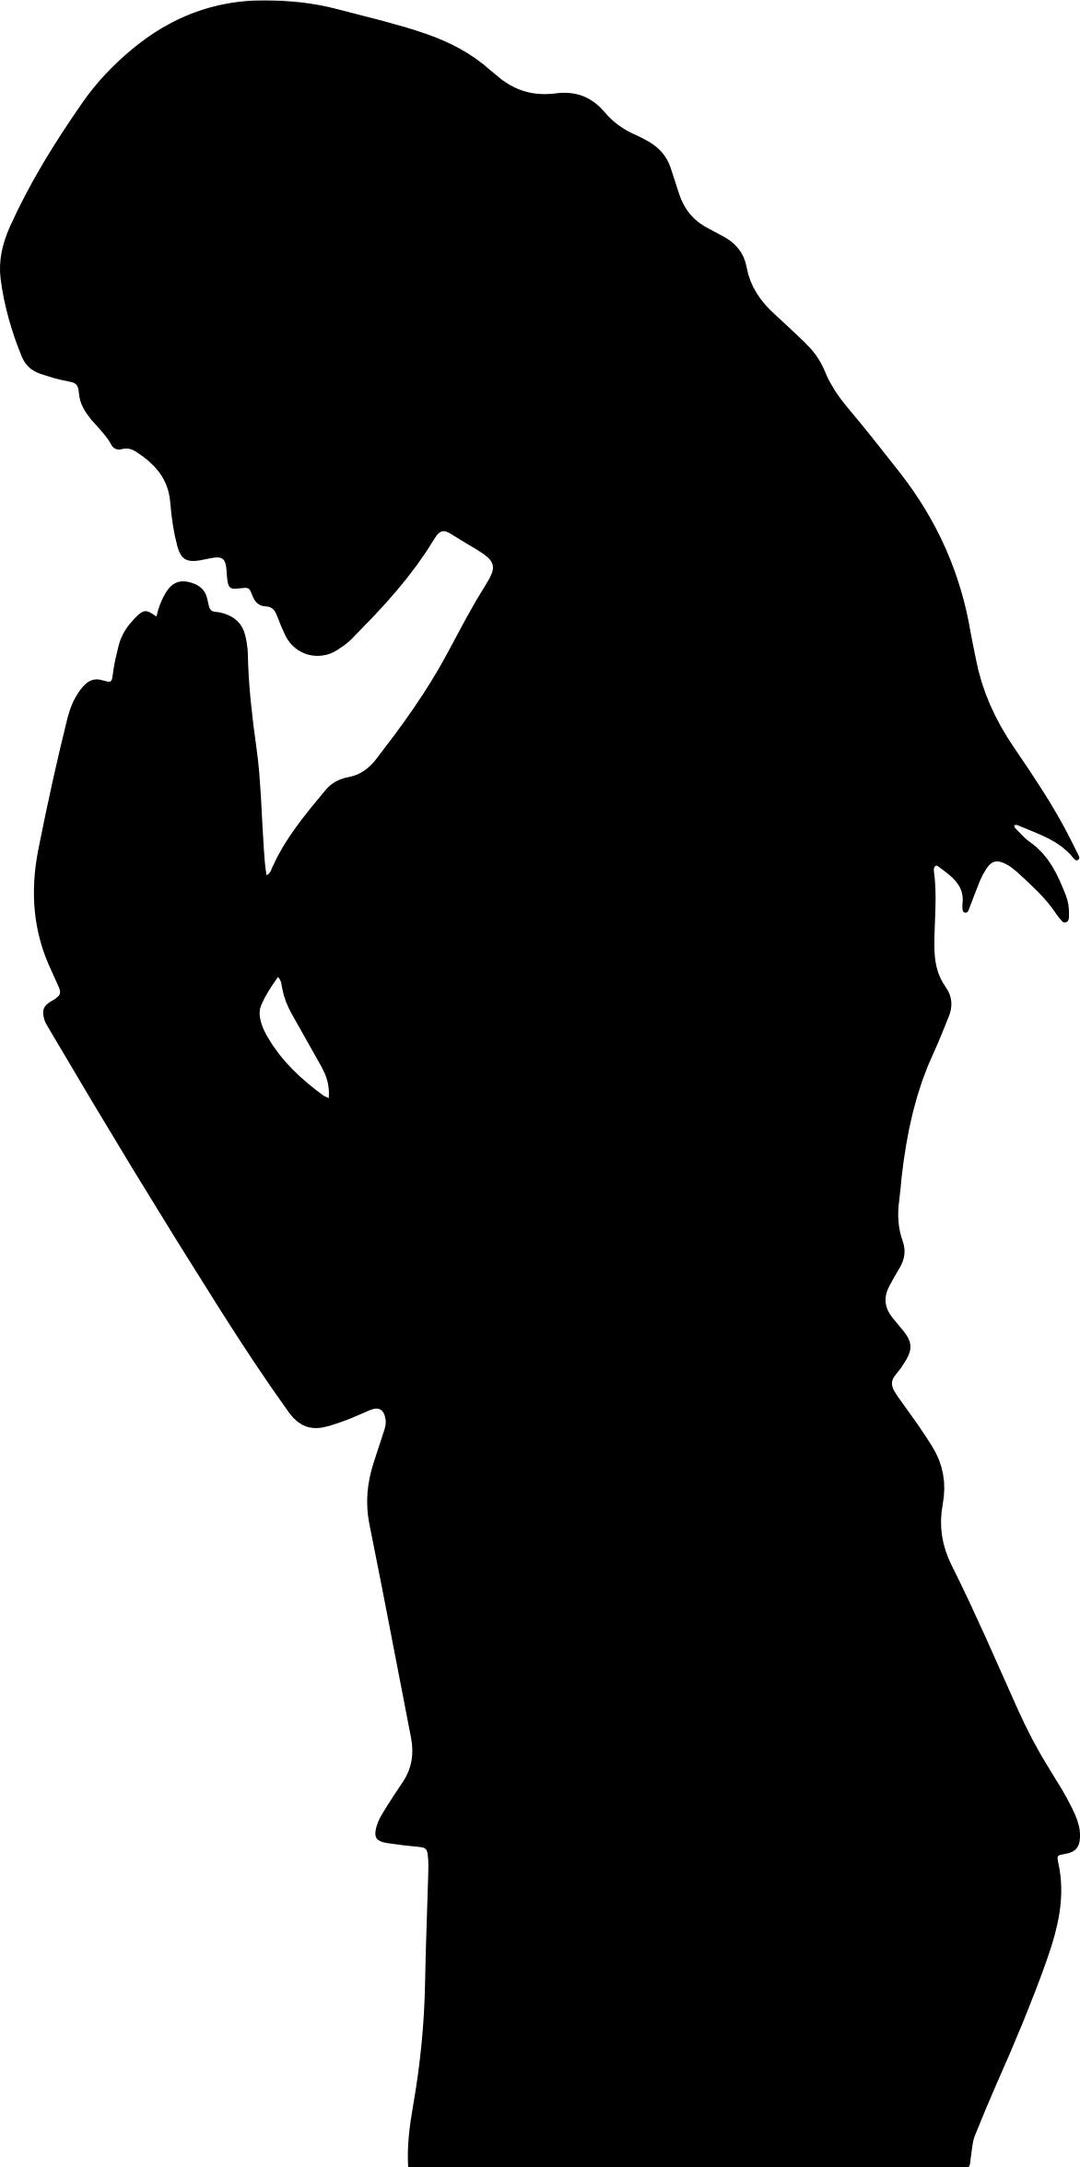 Woman Praying Silhouette png transparent